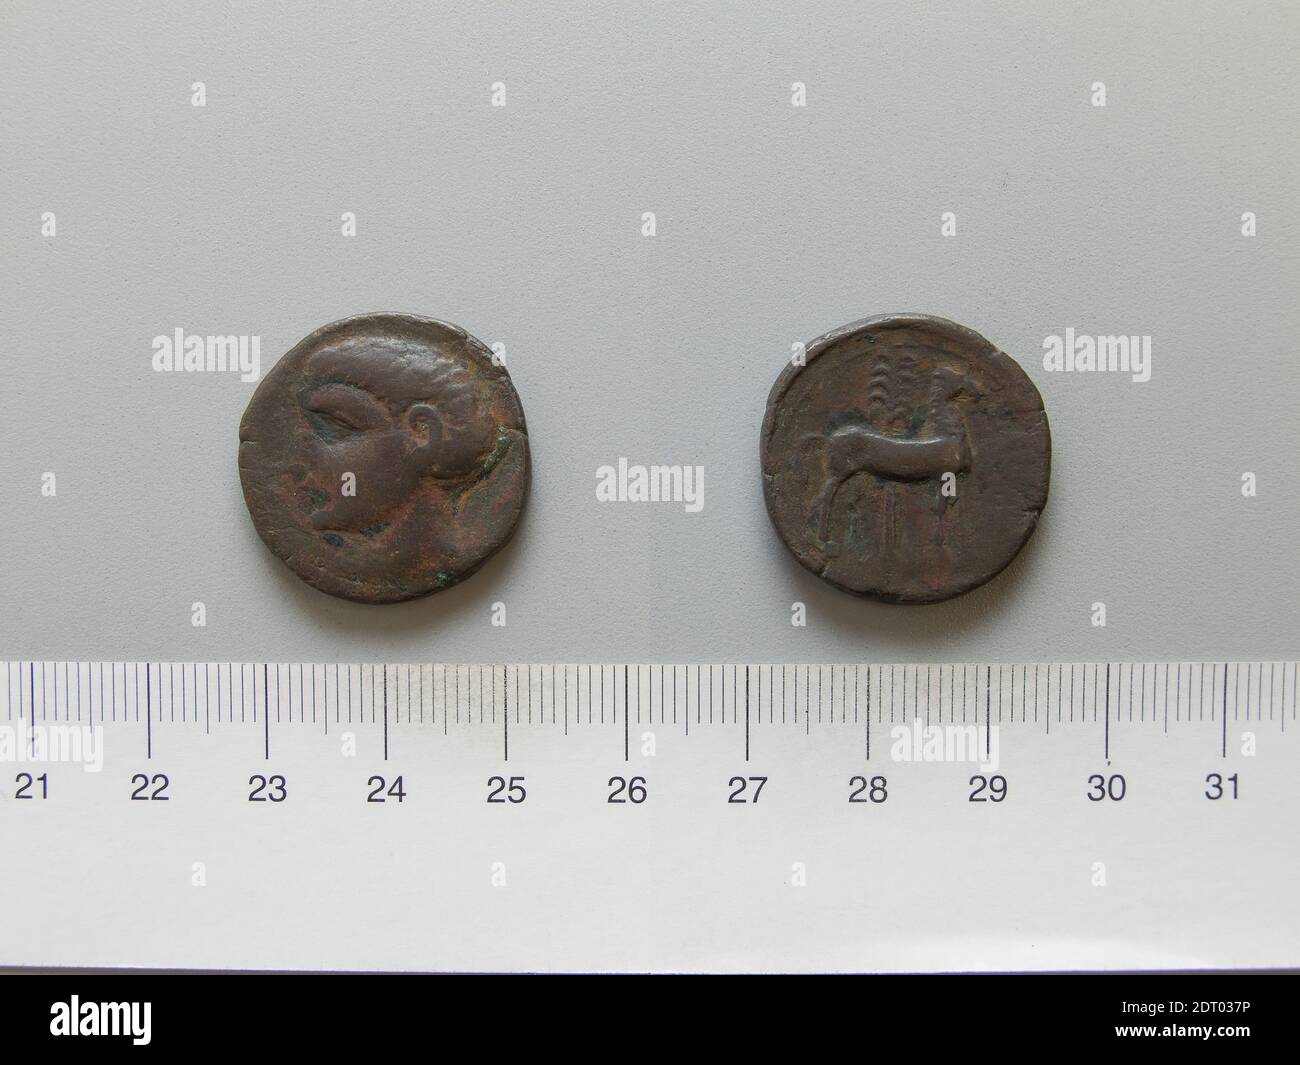 Ruler: Masinissa, King of Numidia, 238–148 B.C., ruled 202–148 B.C.Mint: Numidia, Coin of Masinissa from Numidia, 202–148 B.C., Bronze, 11.21 g, 1:00, 24.4 mm, Made in Numidia, Numidian, 3rd–2nd century B.C., Numismatics Stock Photo